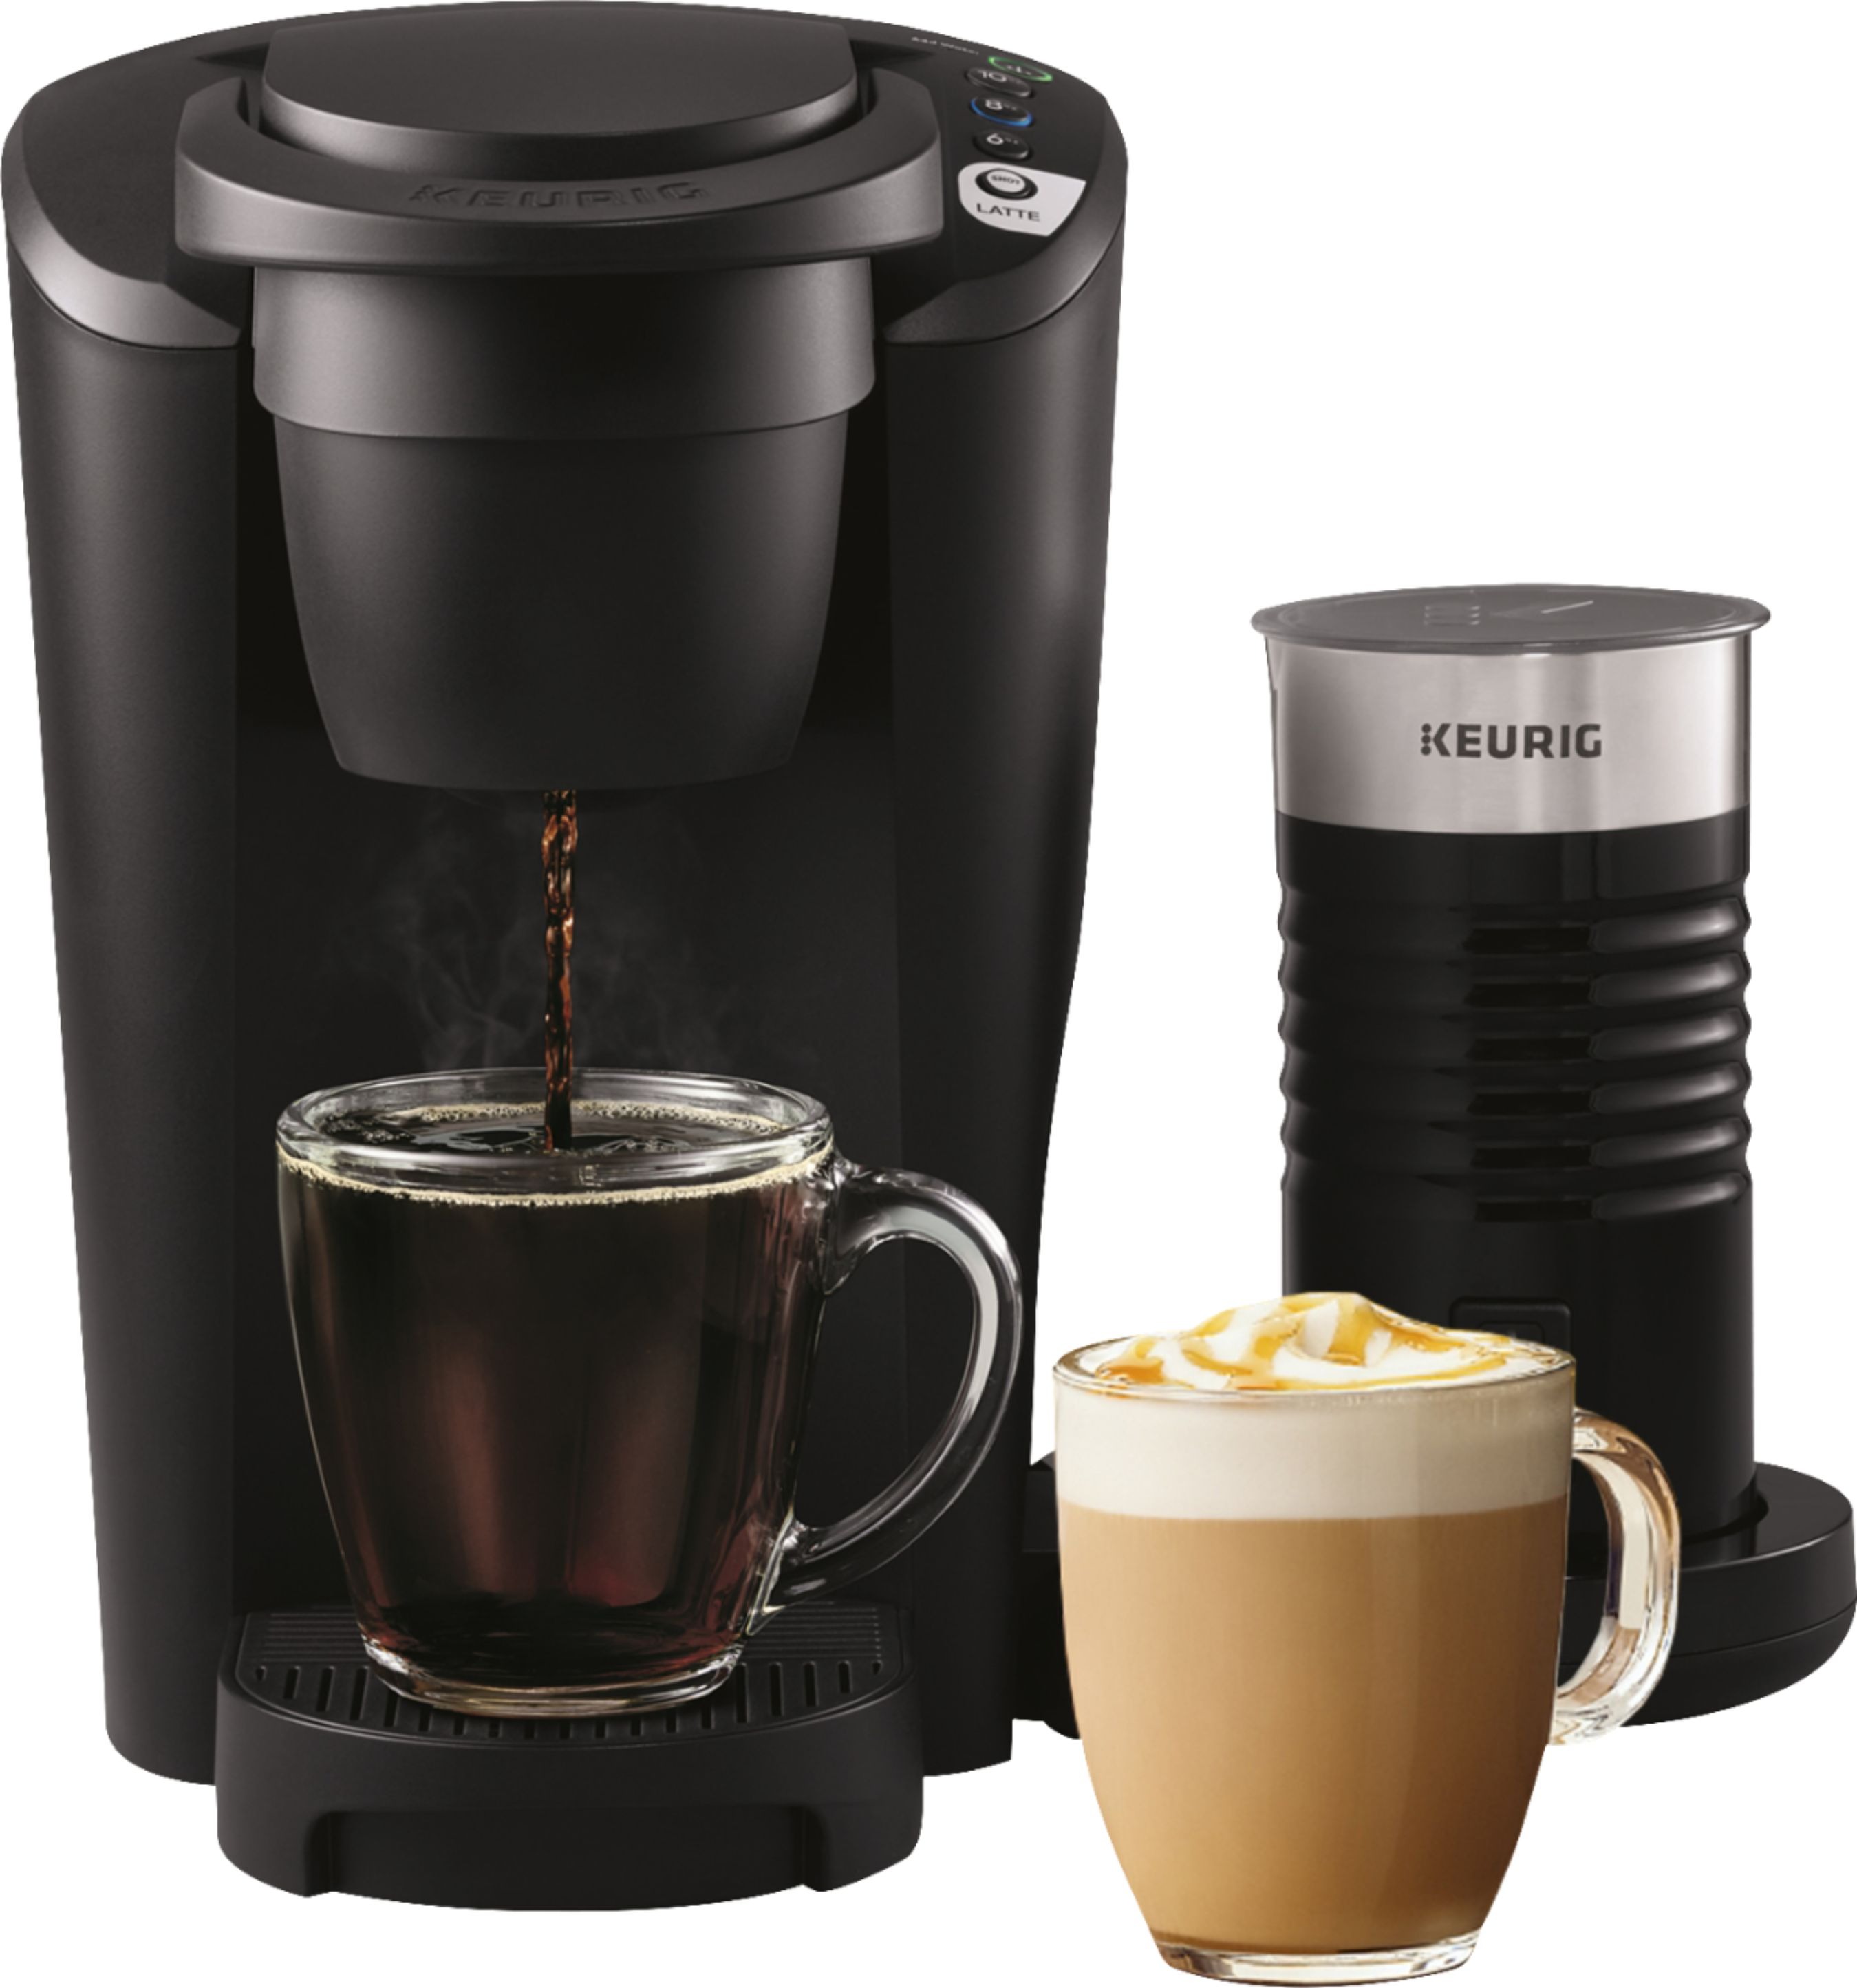 Keurig K Latte Single Serve K-Cup Pod Coffee Maker Black 5000200559 - $59.99 at Best Buy